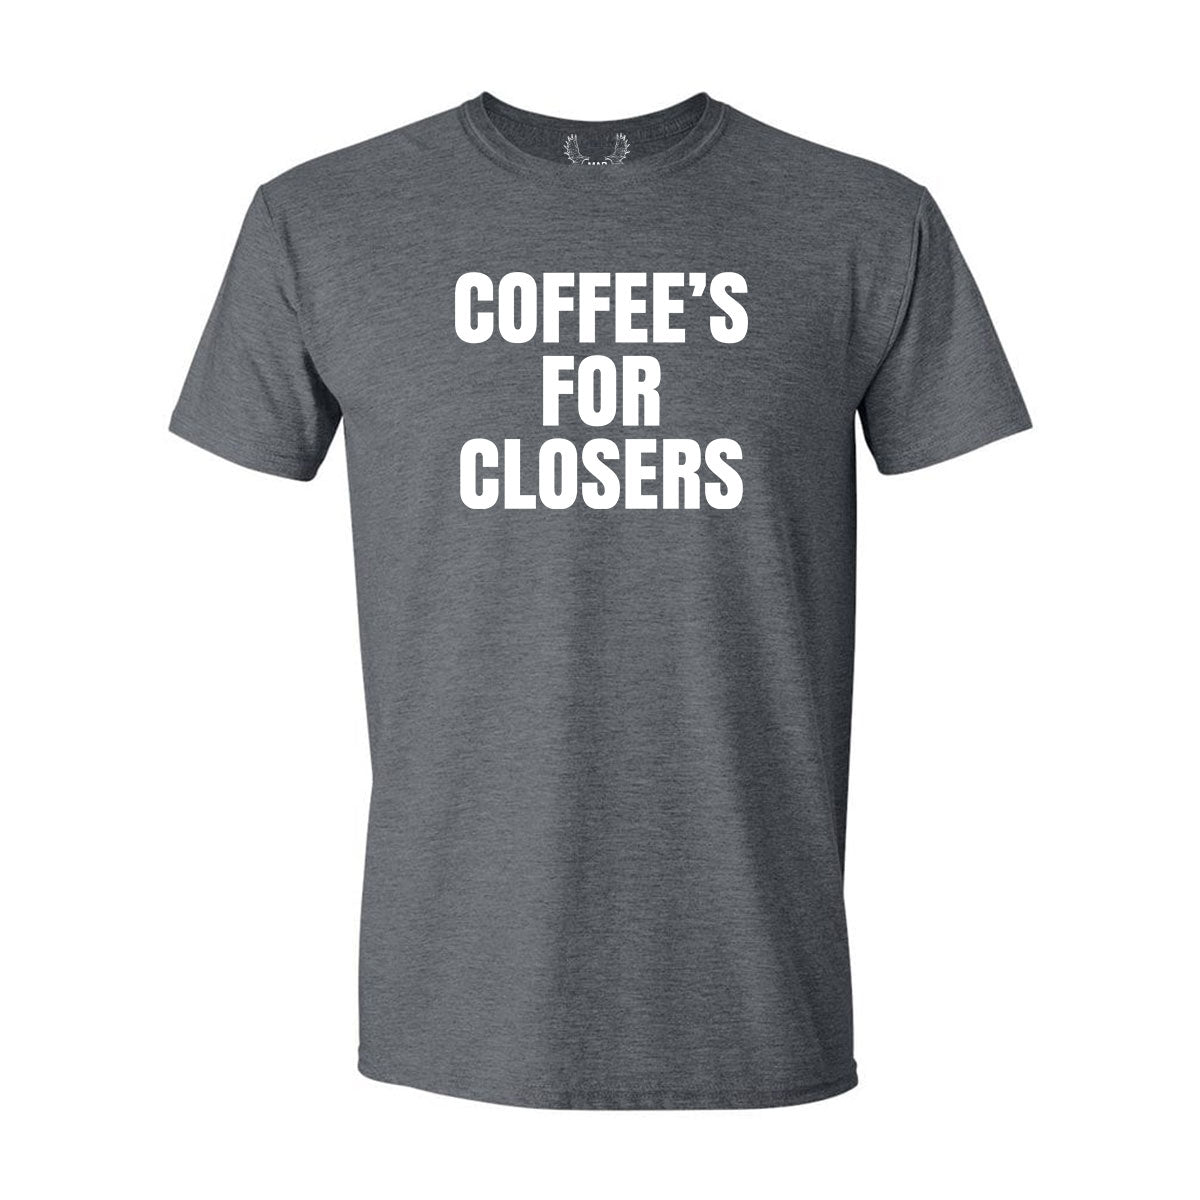  CafePress Moose Crossing Ash Grey T Shirt 100% Cotton